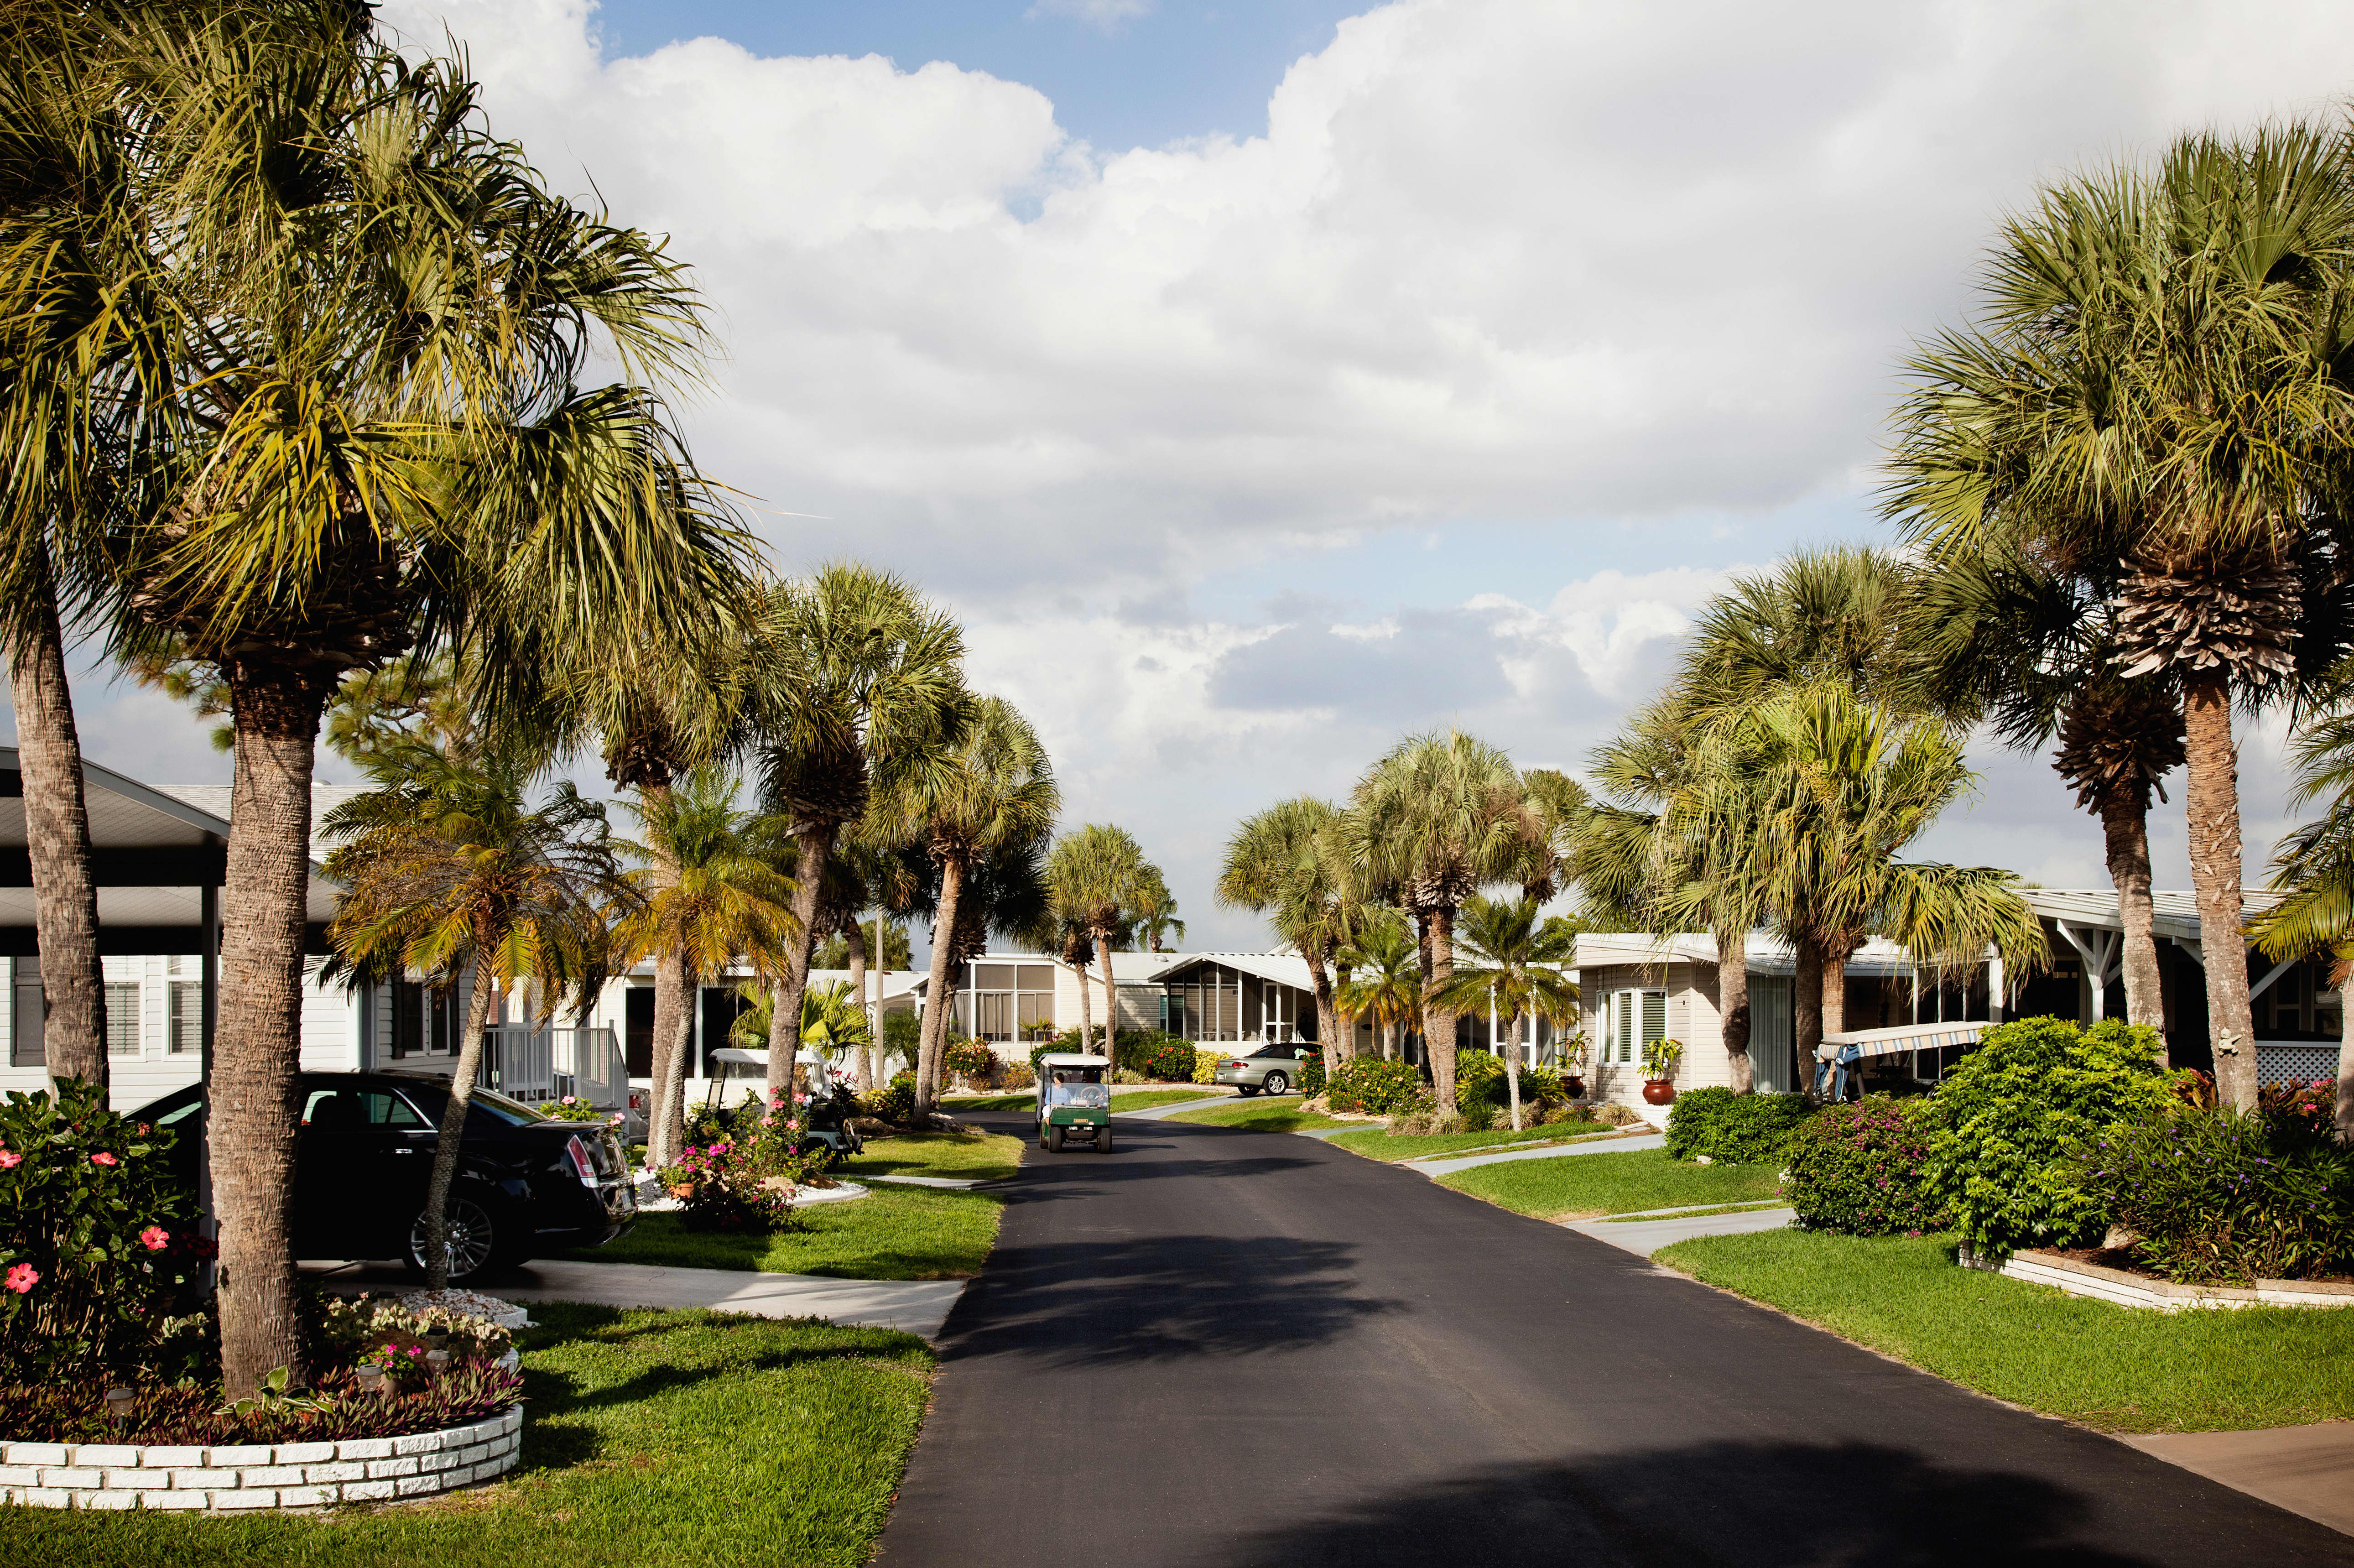 55+ Retirement Communities in Florida